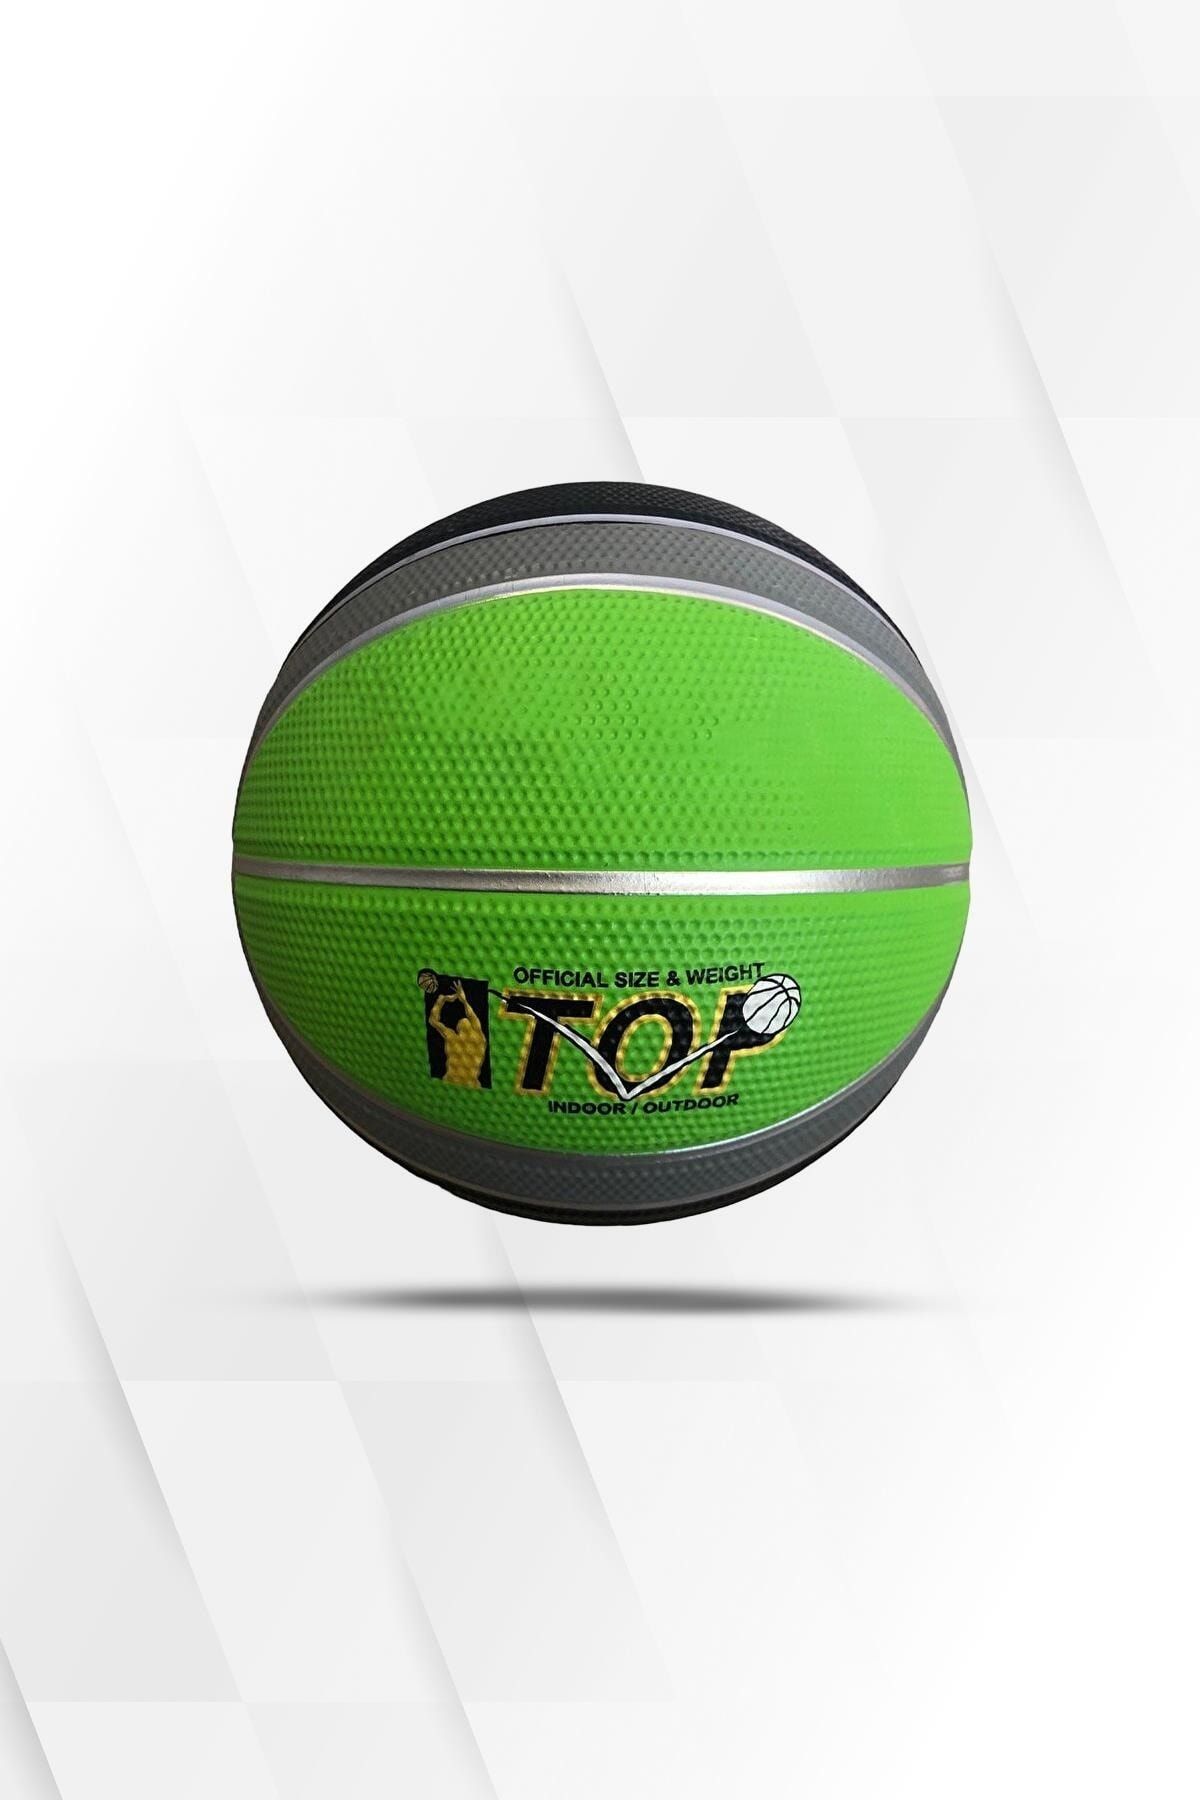 Hsport Üst Kalite Pro Basketbol Topu Iç-dış Saha 7 Numara Kaymaz Kauçuk Basket Topu + Hediyeli